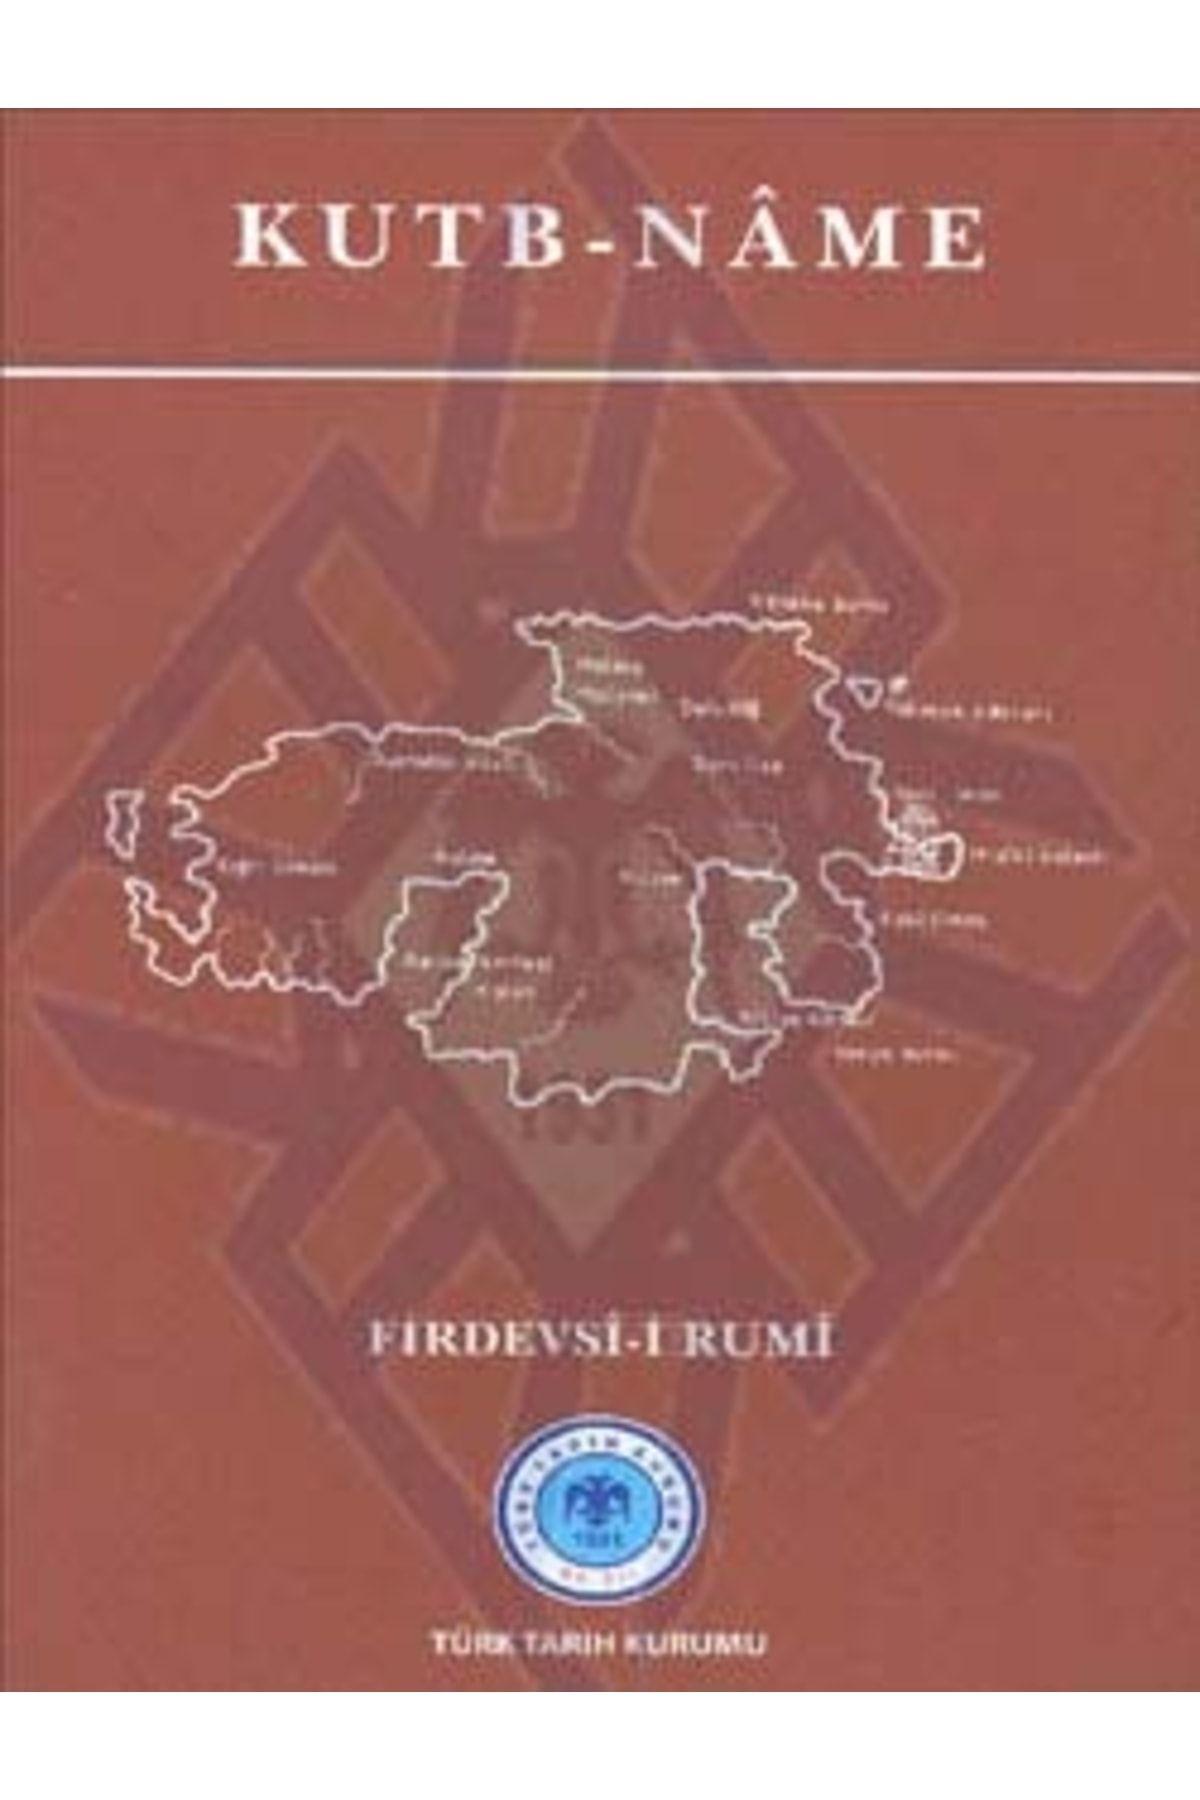 Türk Tarih Kurumu Yayınları Firdevsî-i Rumî: Kutb-nâme, 2011